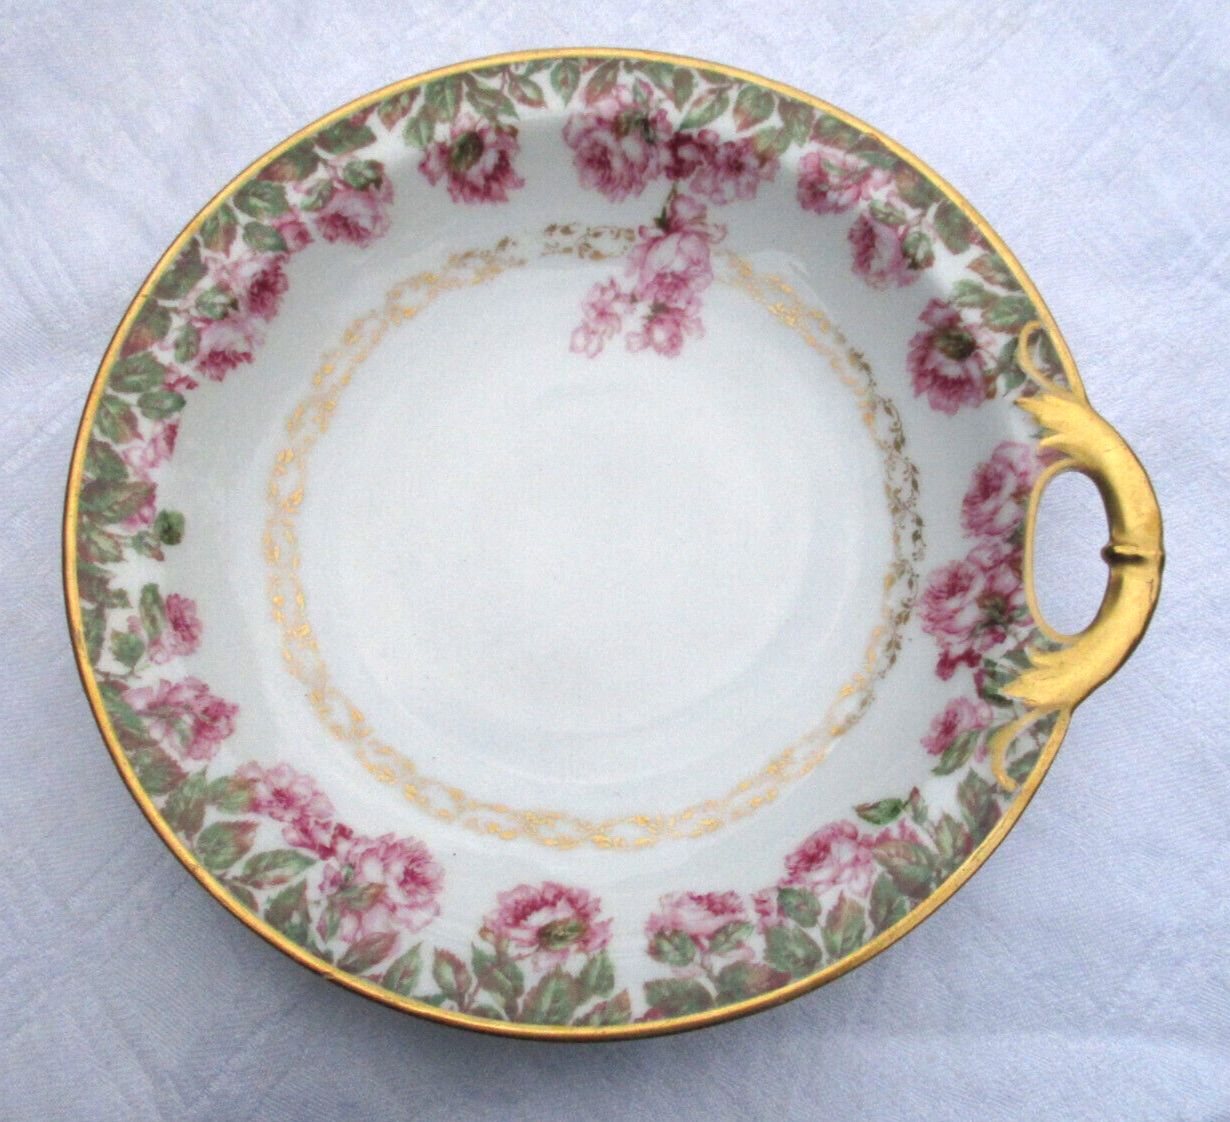 Primary image for Haviland France Limoges Johnston China Pink Roses Gold Handled Bowl Plate 9"